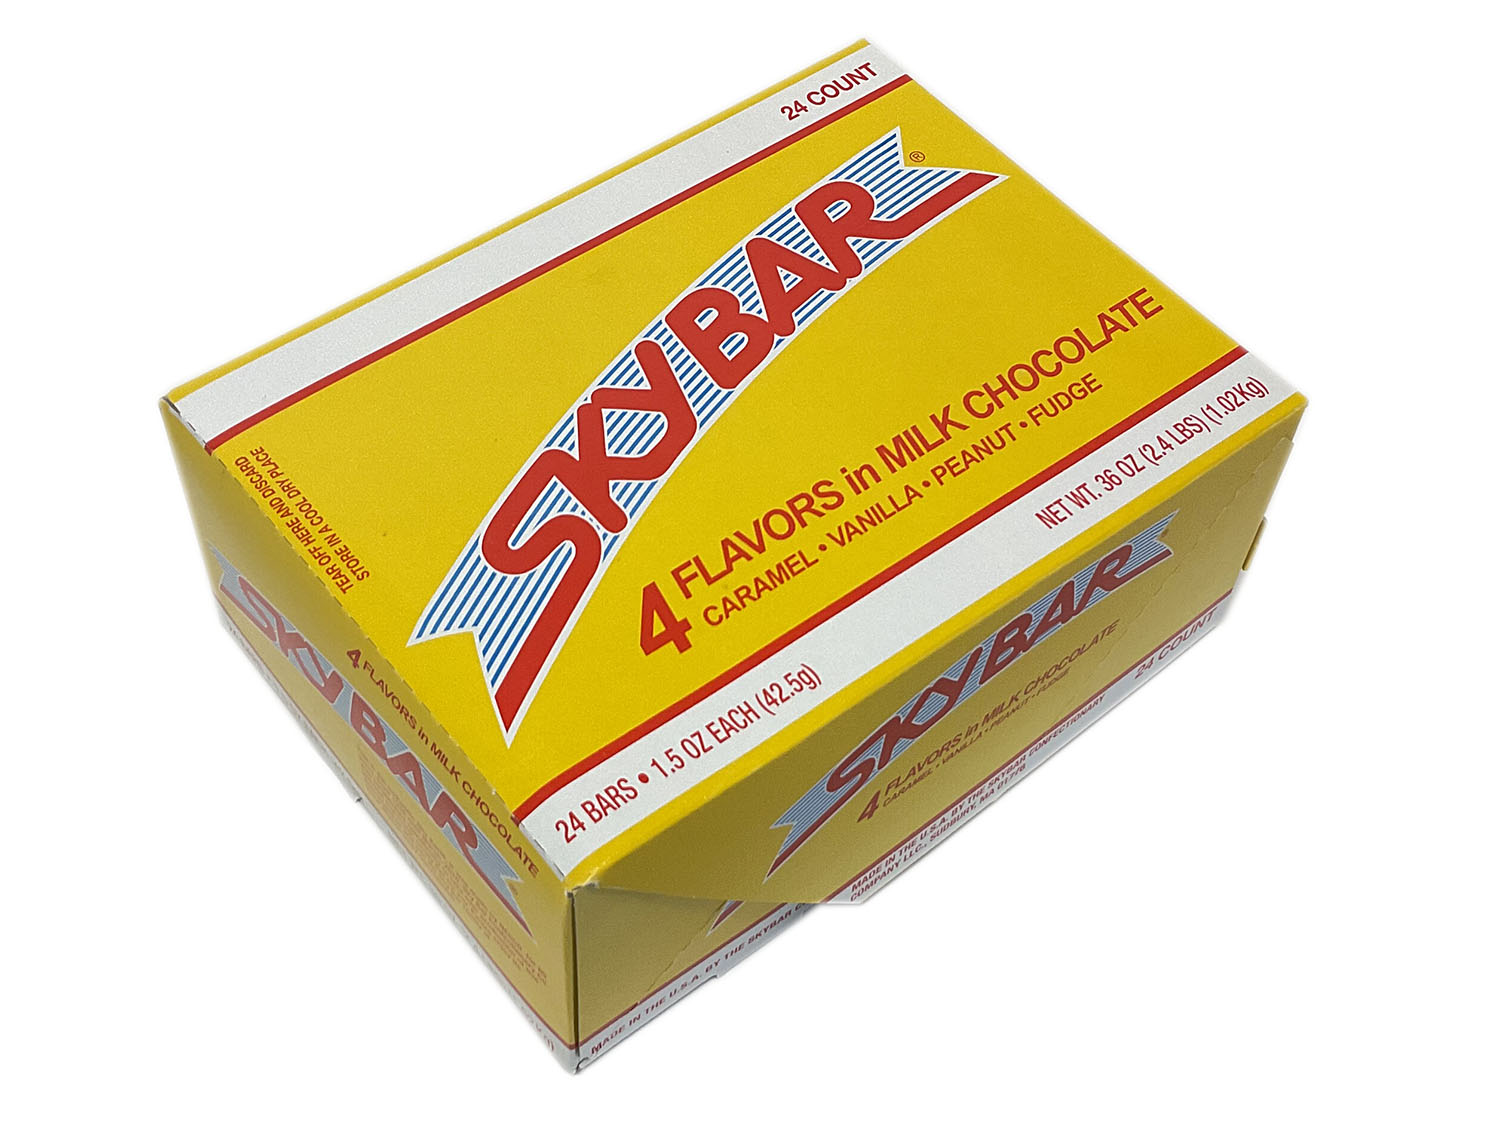 Sky Bar - 1.5 oz bar - box of 24